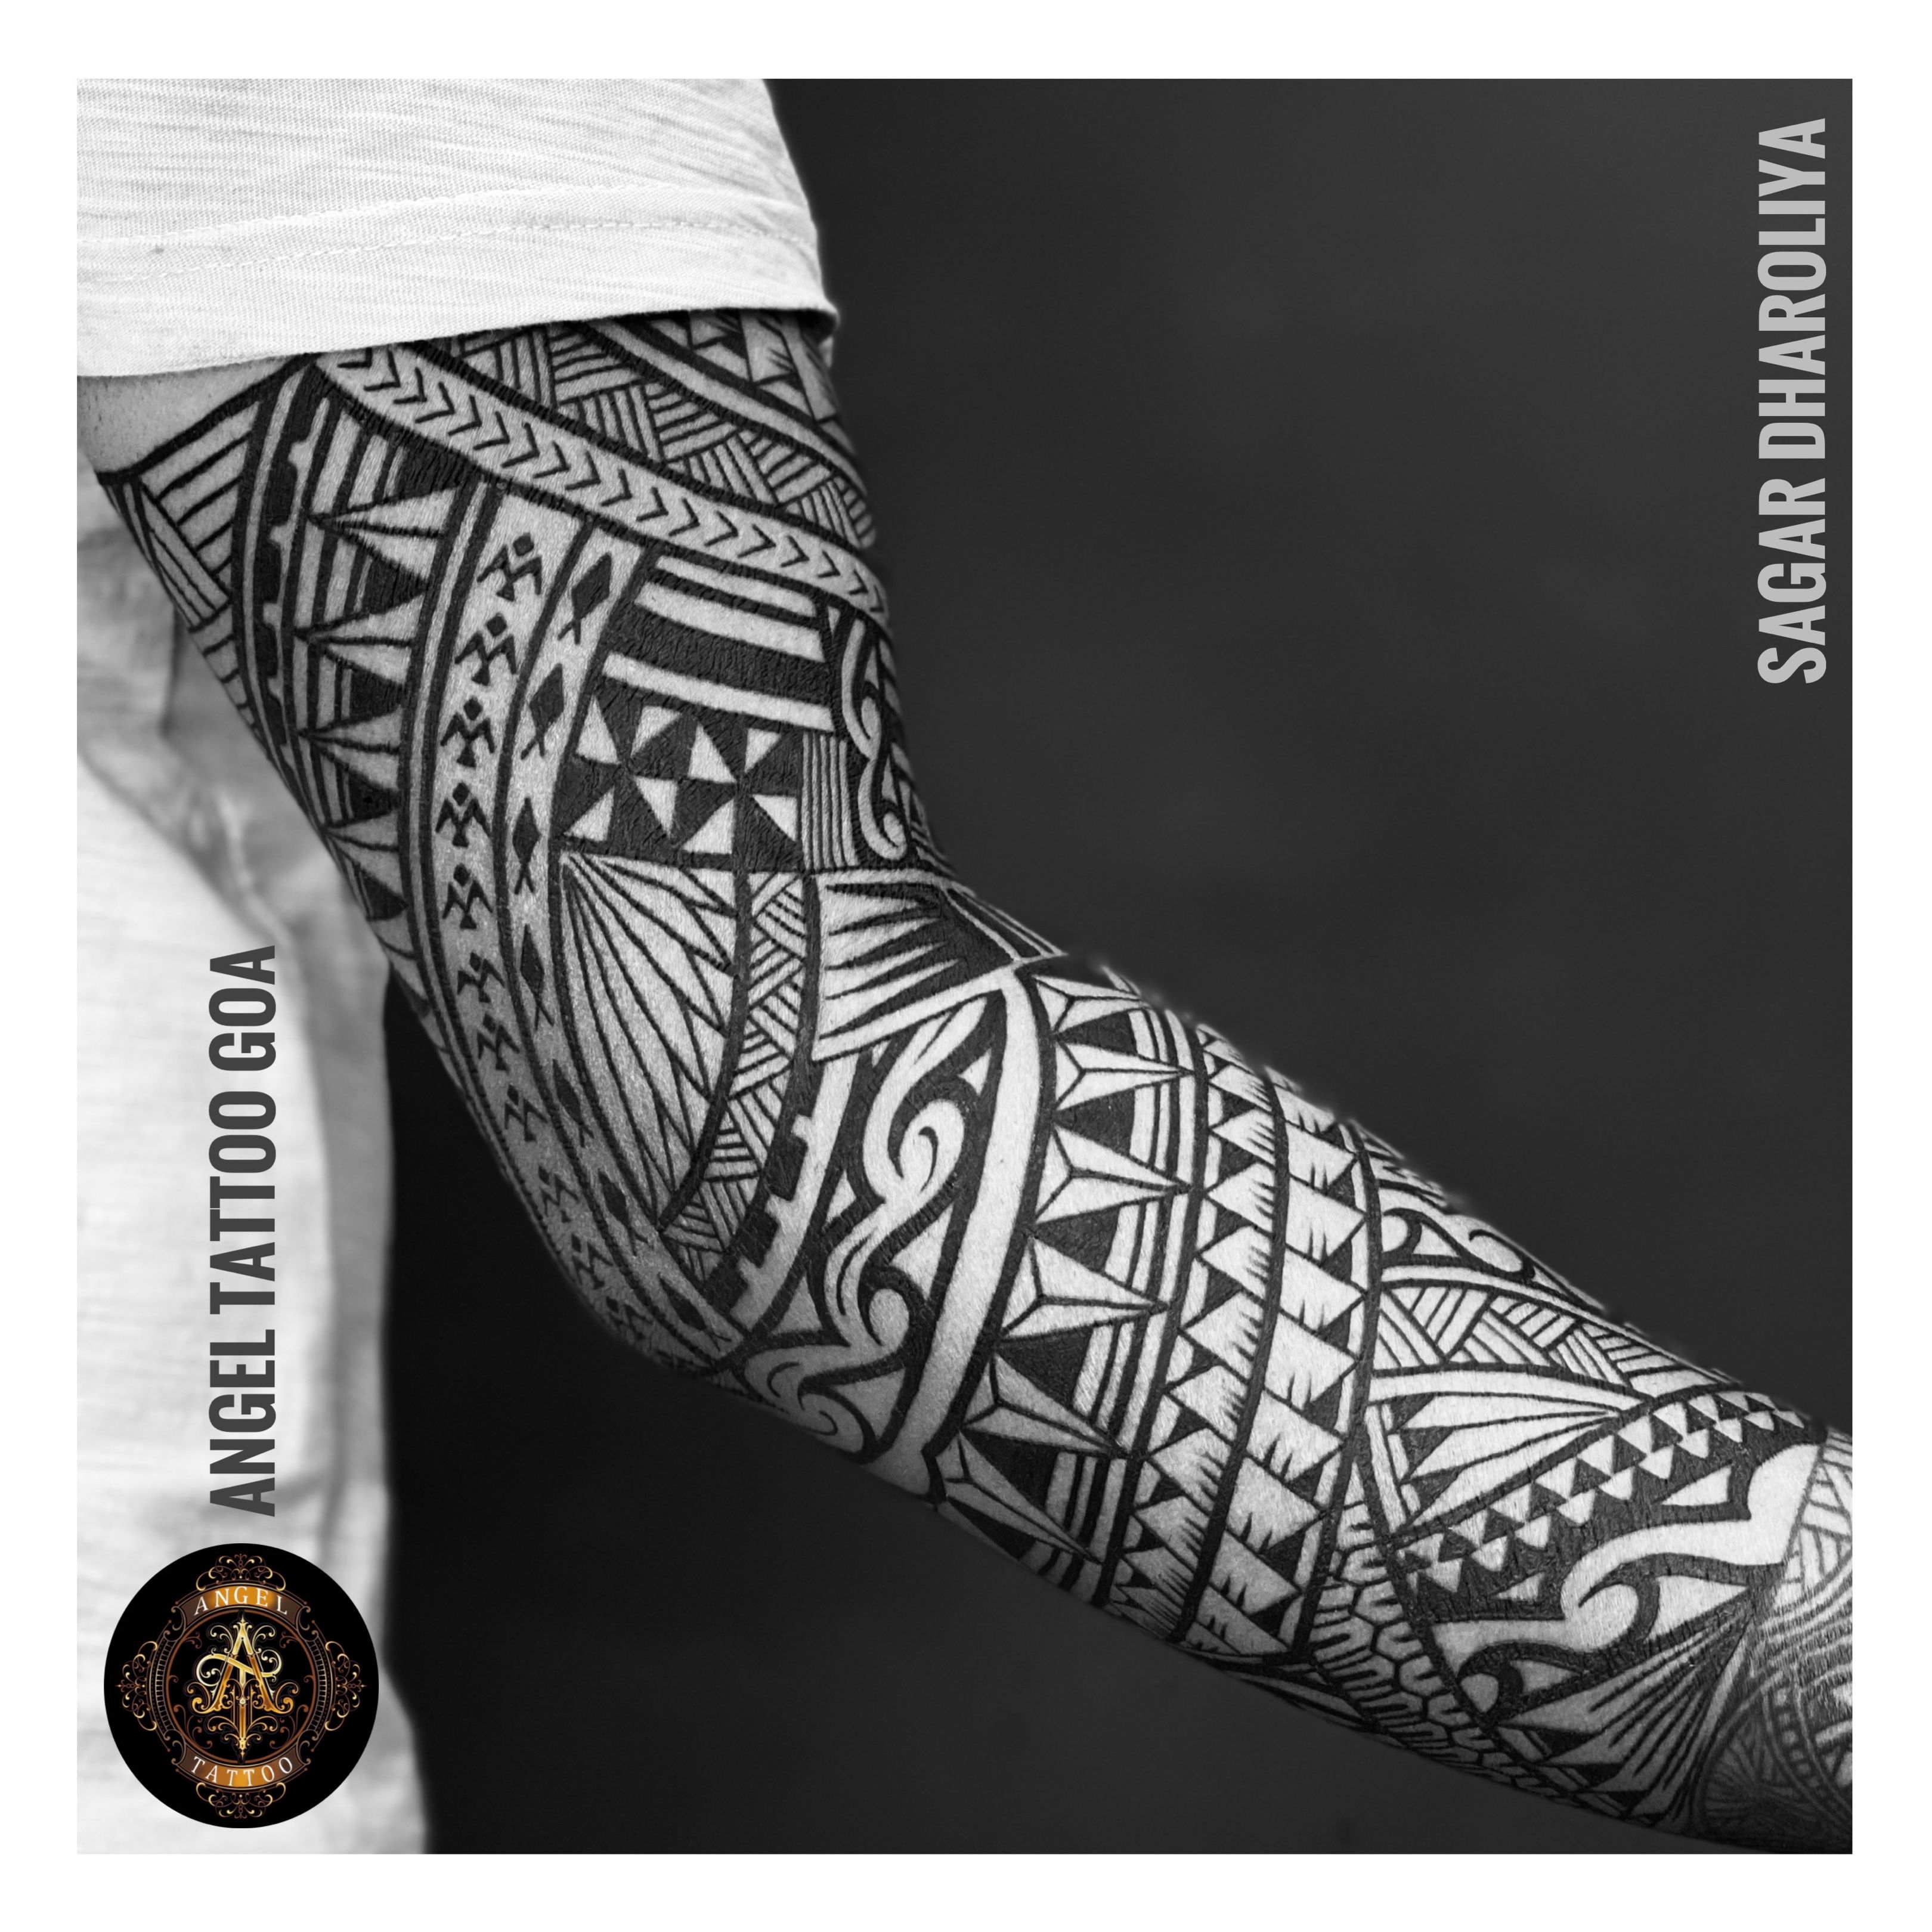 Maori polynesian tattoo border tribal sleeve seamless pattern vector with  sun face. Samoan bracelet tattoo design fore arm or foot. Armband tattoo  tribal. - Stock Image - Everypixel